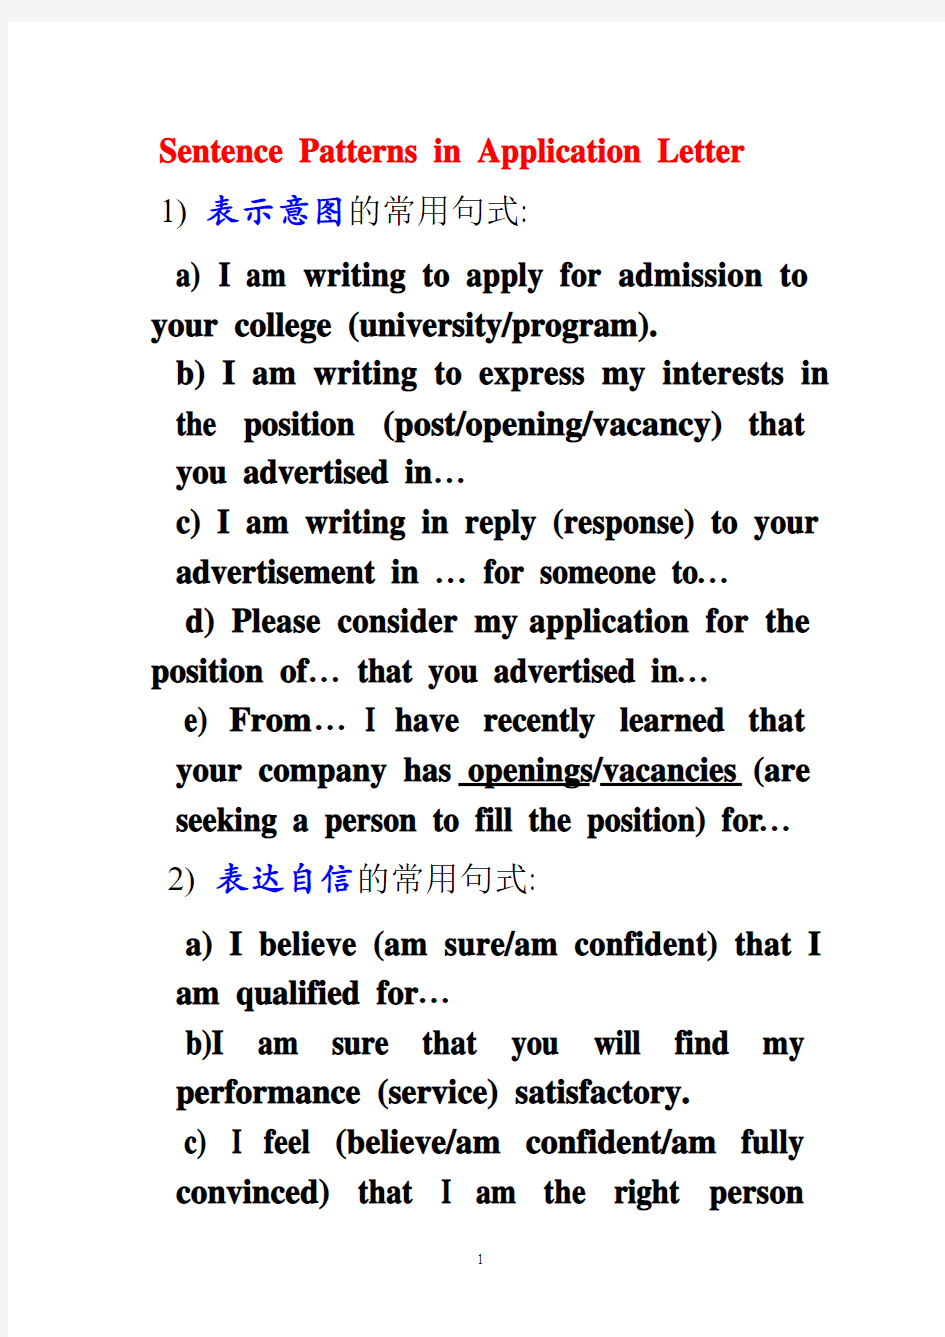 Sentence Patterns in Application Letter